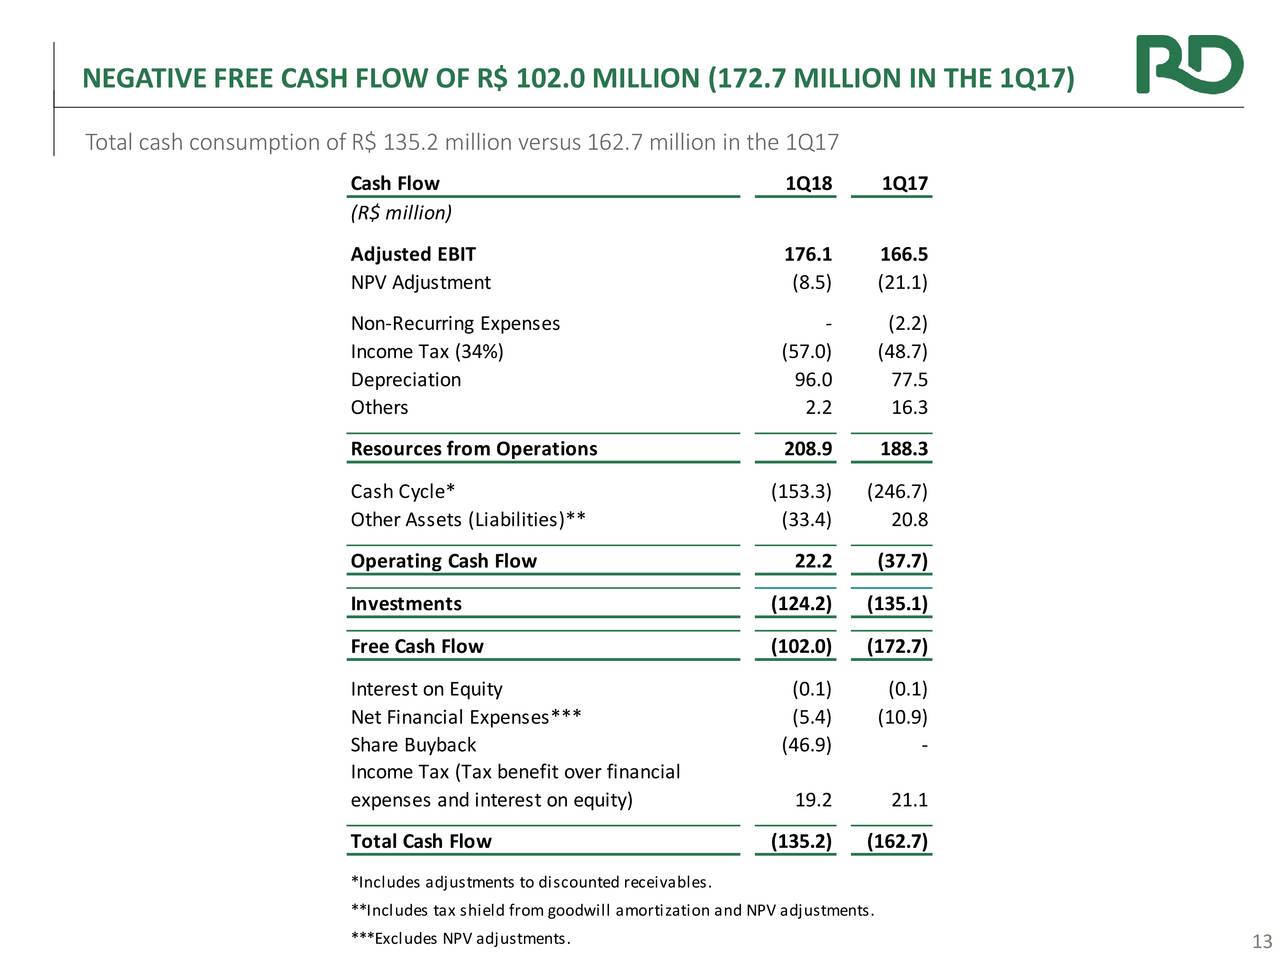 NEGATIVE FREE CASH FLOW OF R$ 102.0 MILLION (172.7 MILLION IN THE 1Q17)